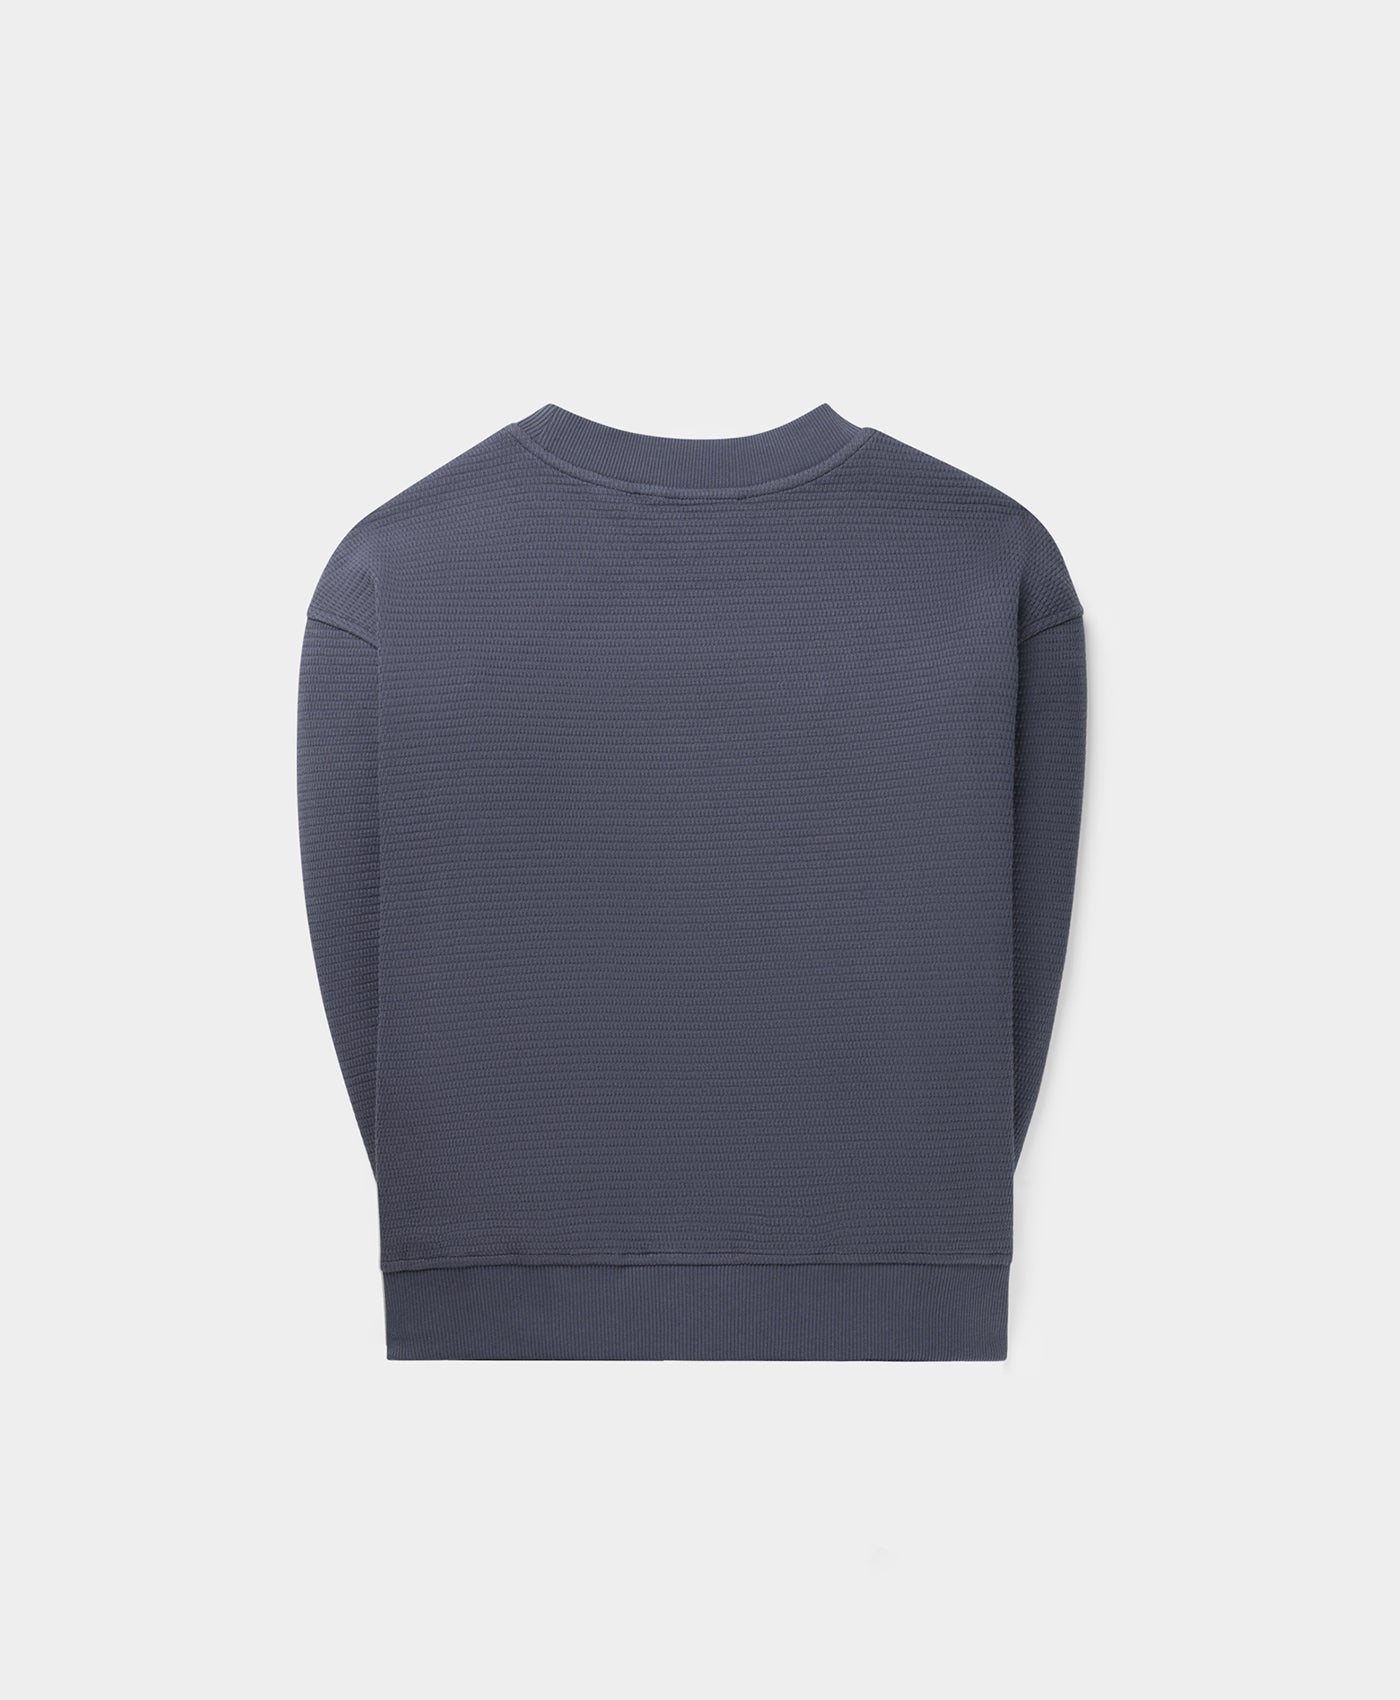 DP - Odyssey Blue Prisha Sweater - Packshot - Rear